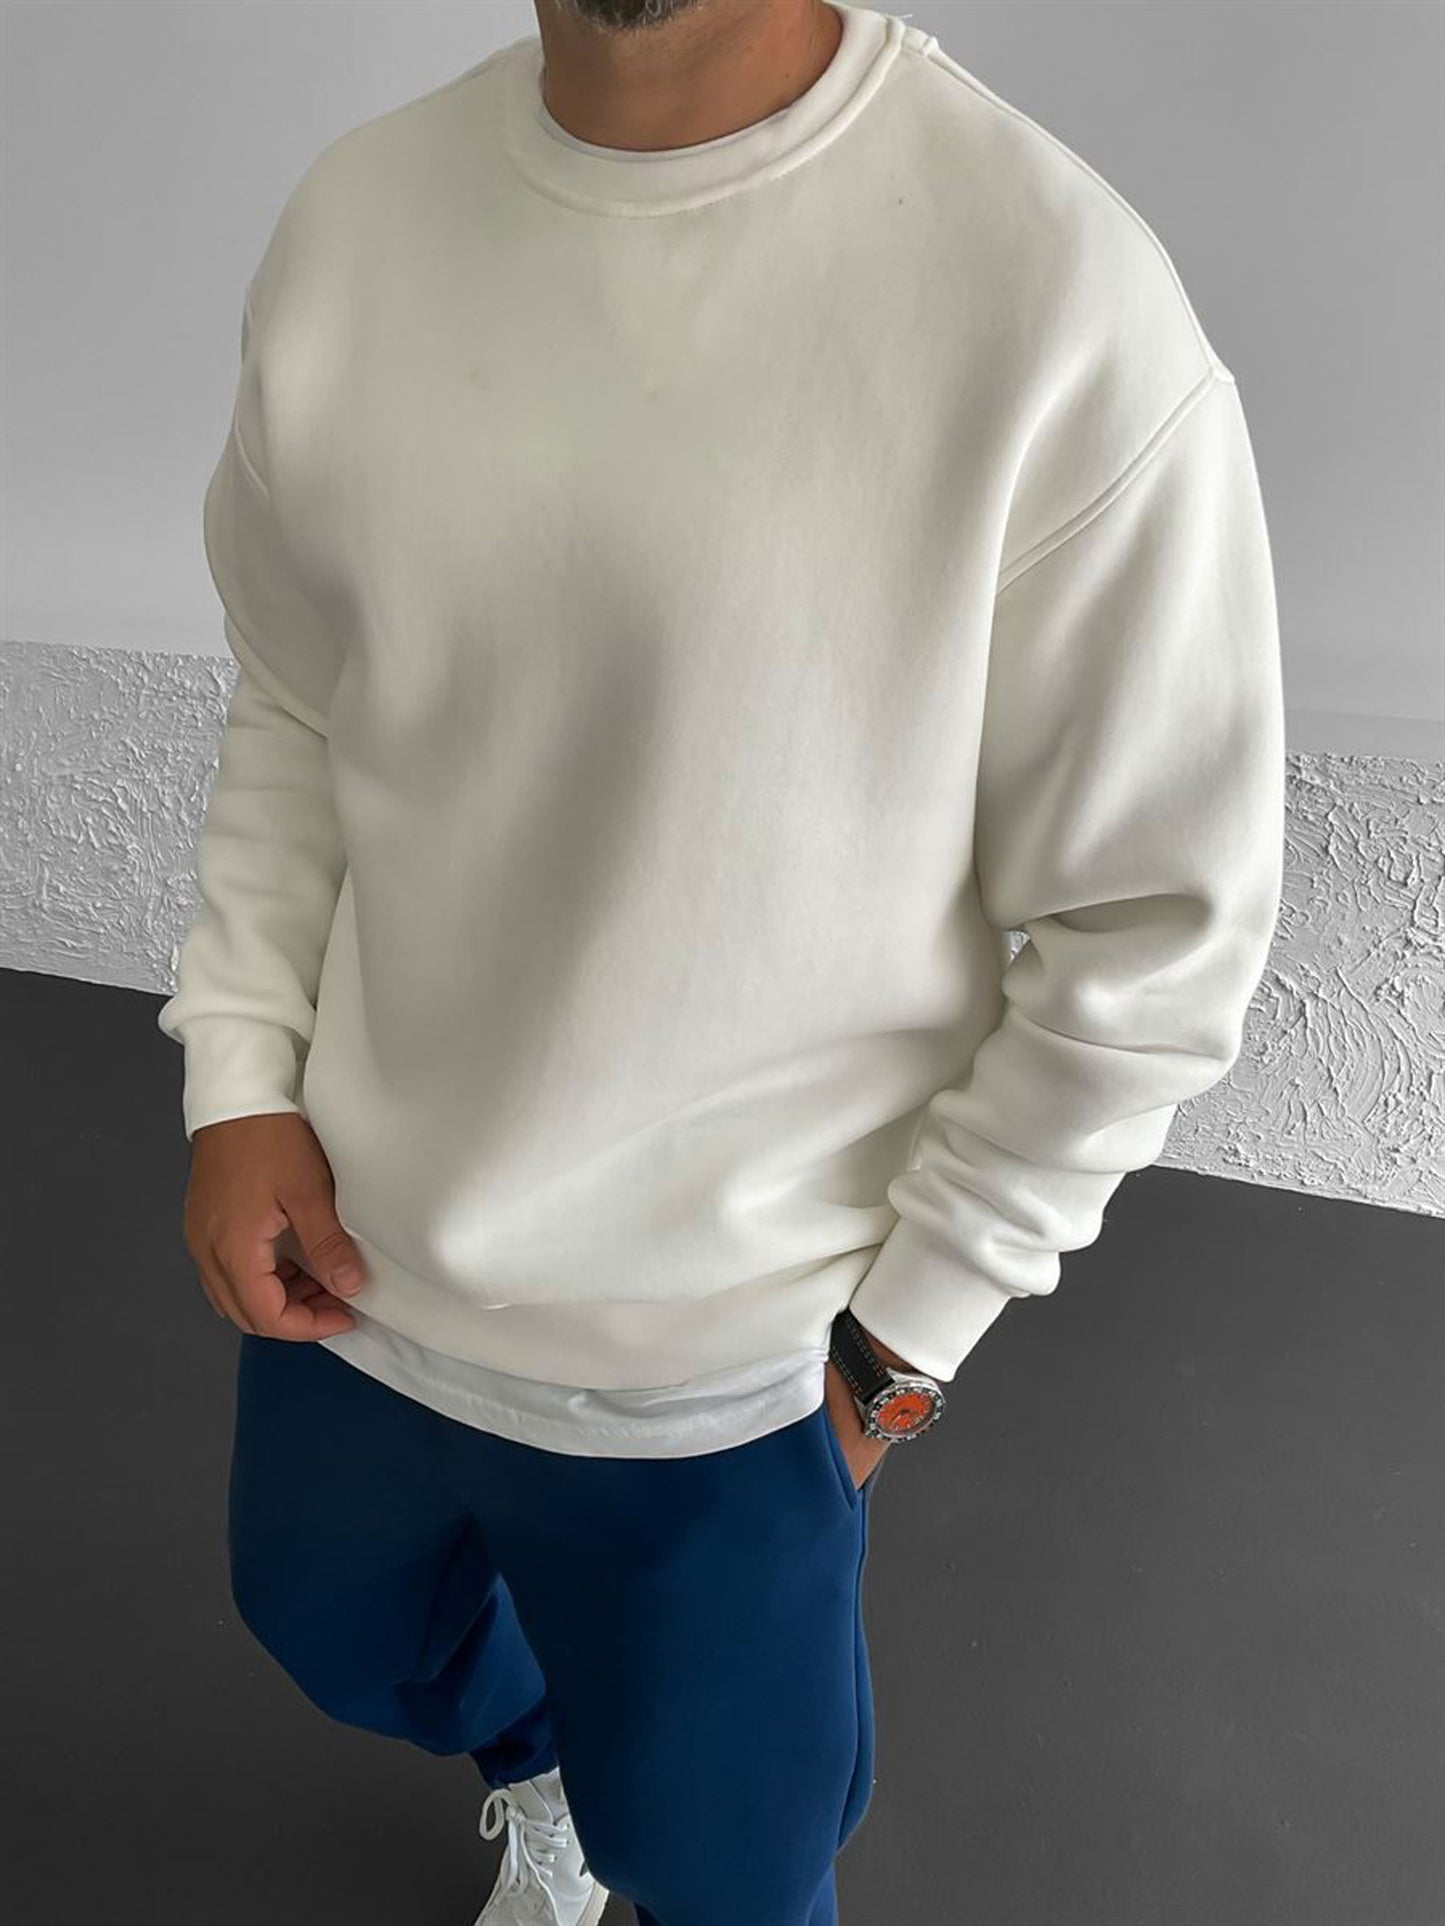 Off-White "What" Printed Oversize Sweatshirt